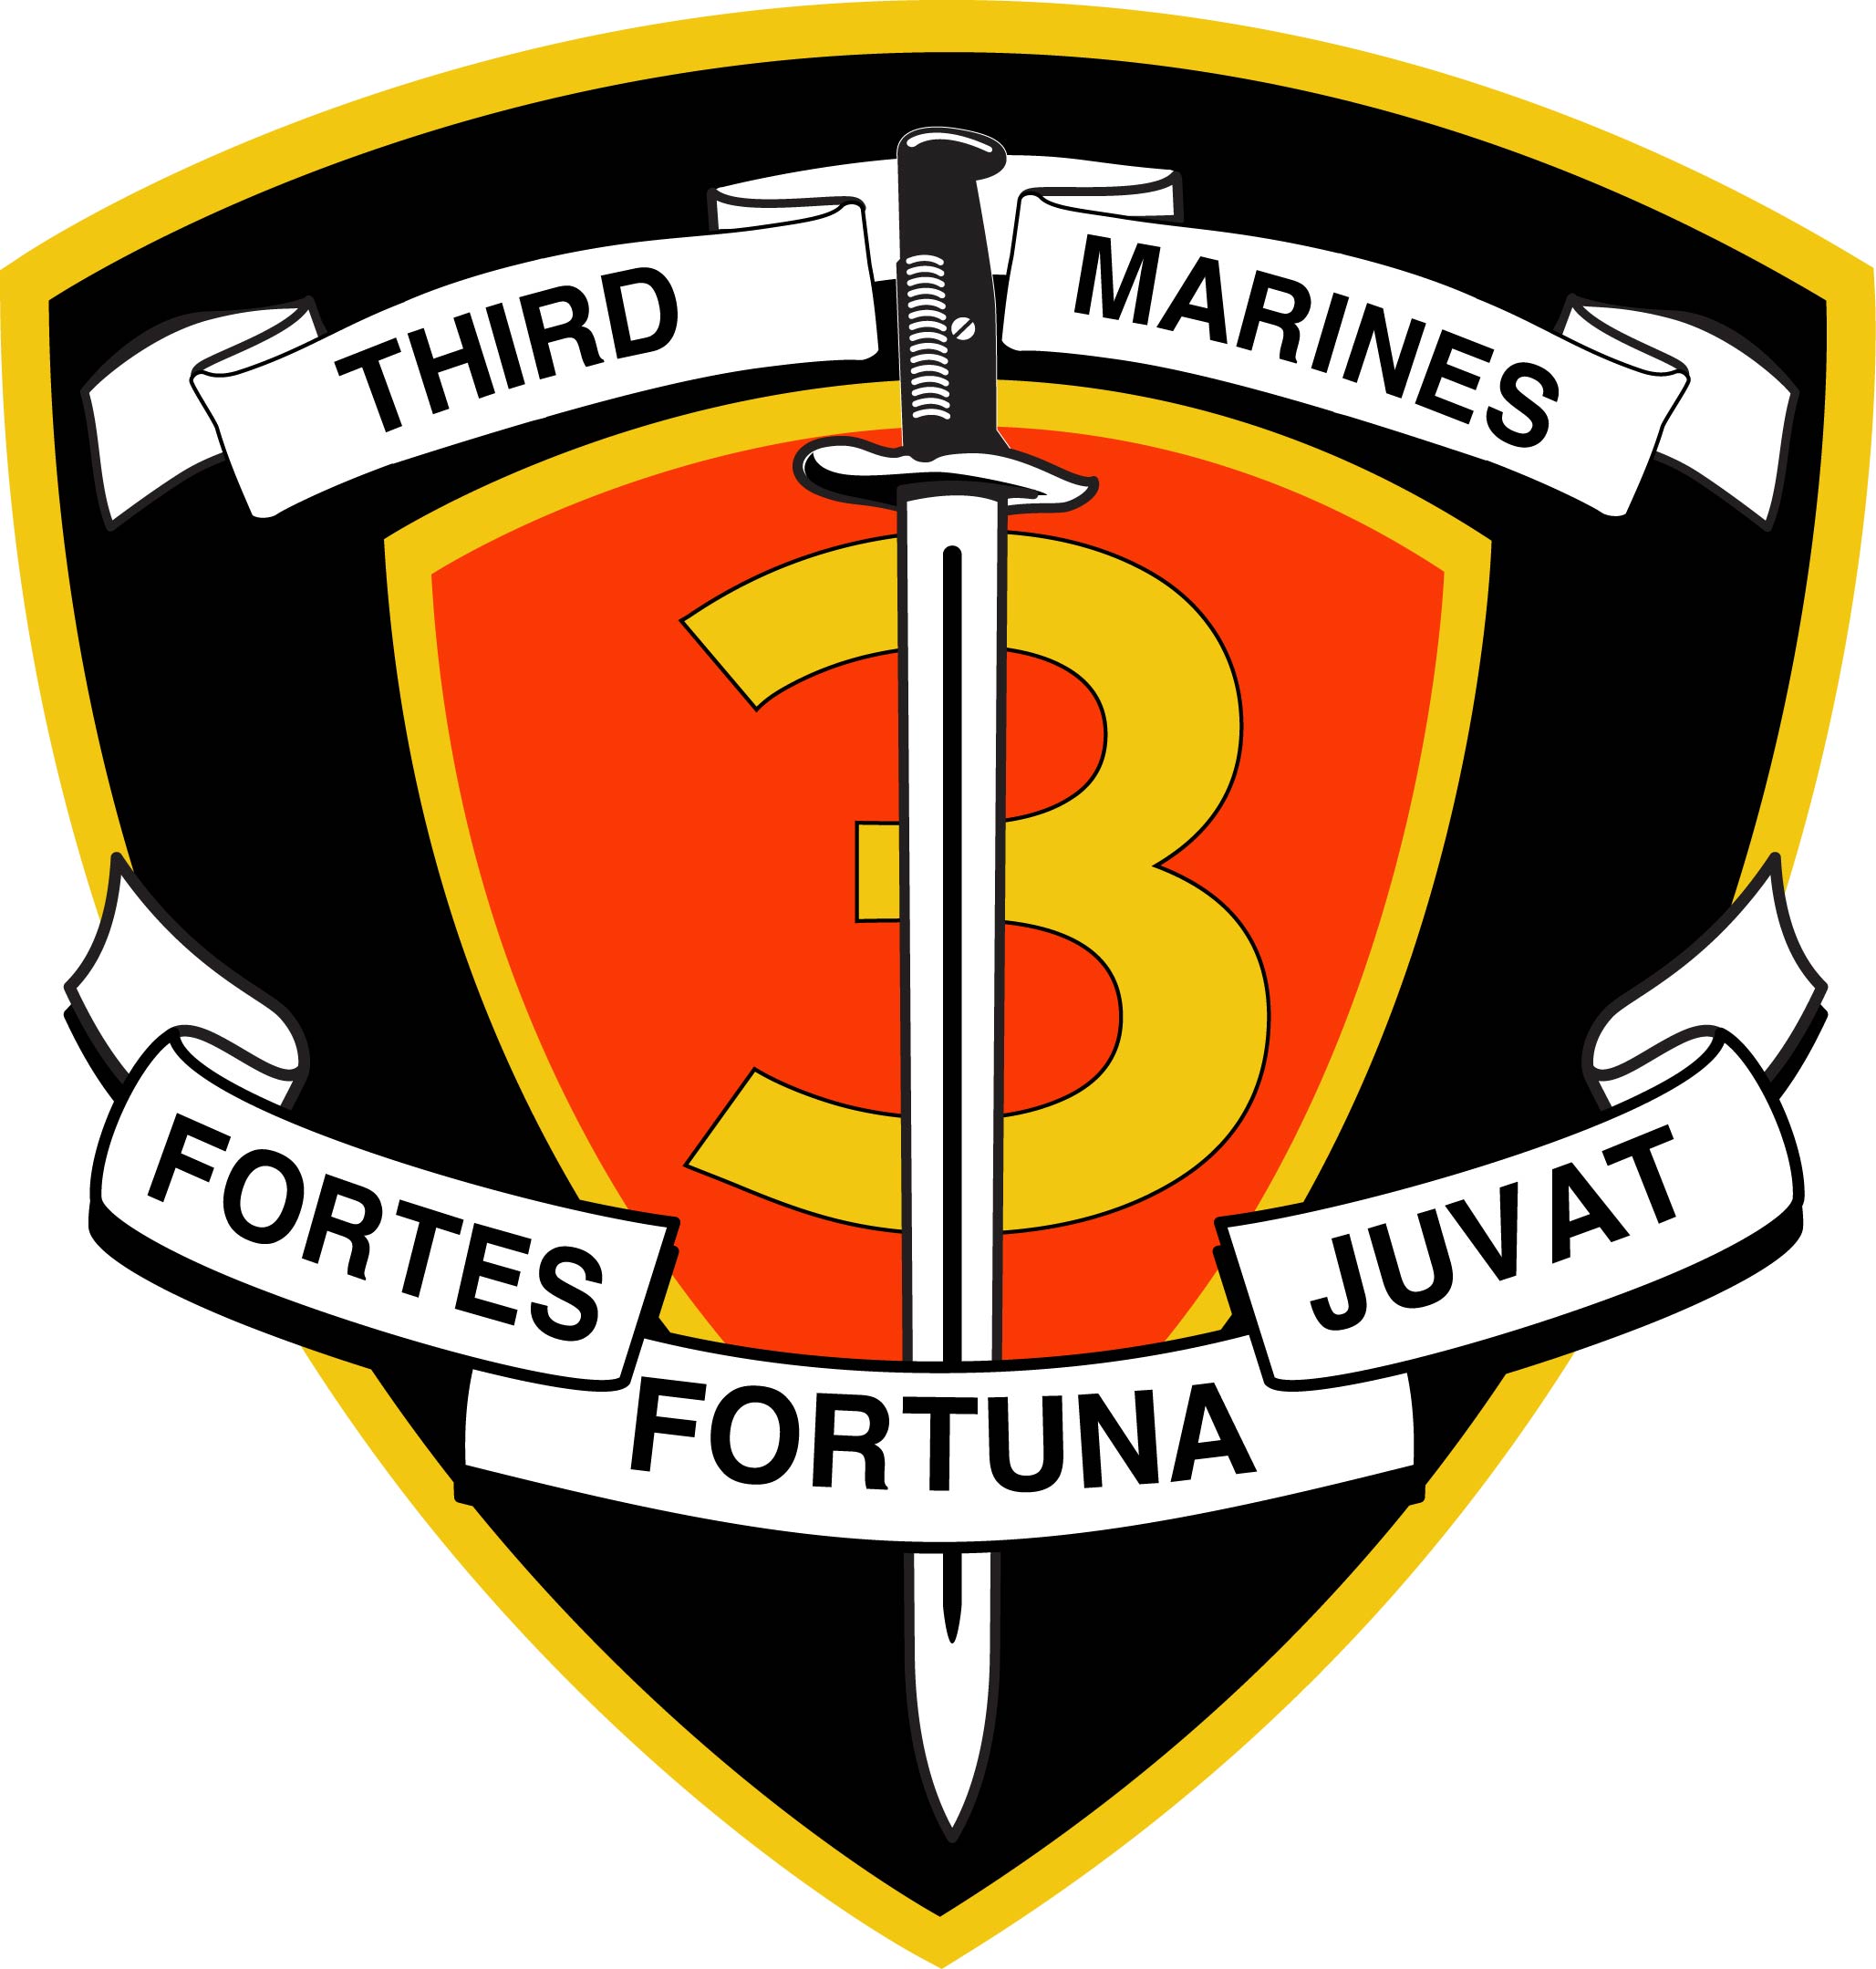 3rd Marine Regiment (United States) - Wikipedia, the free encyclopedia